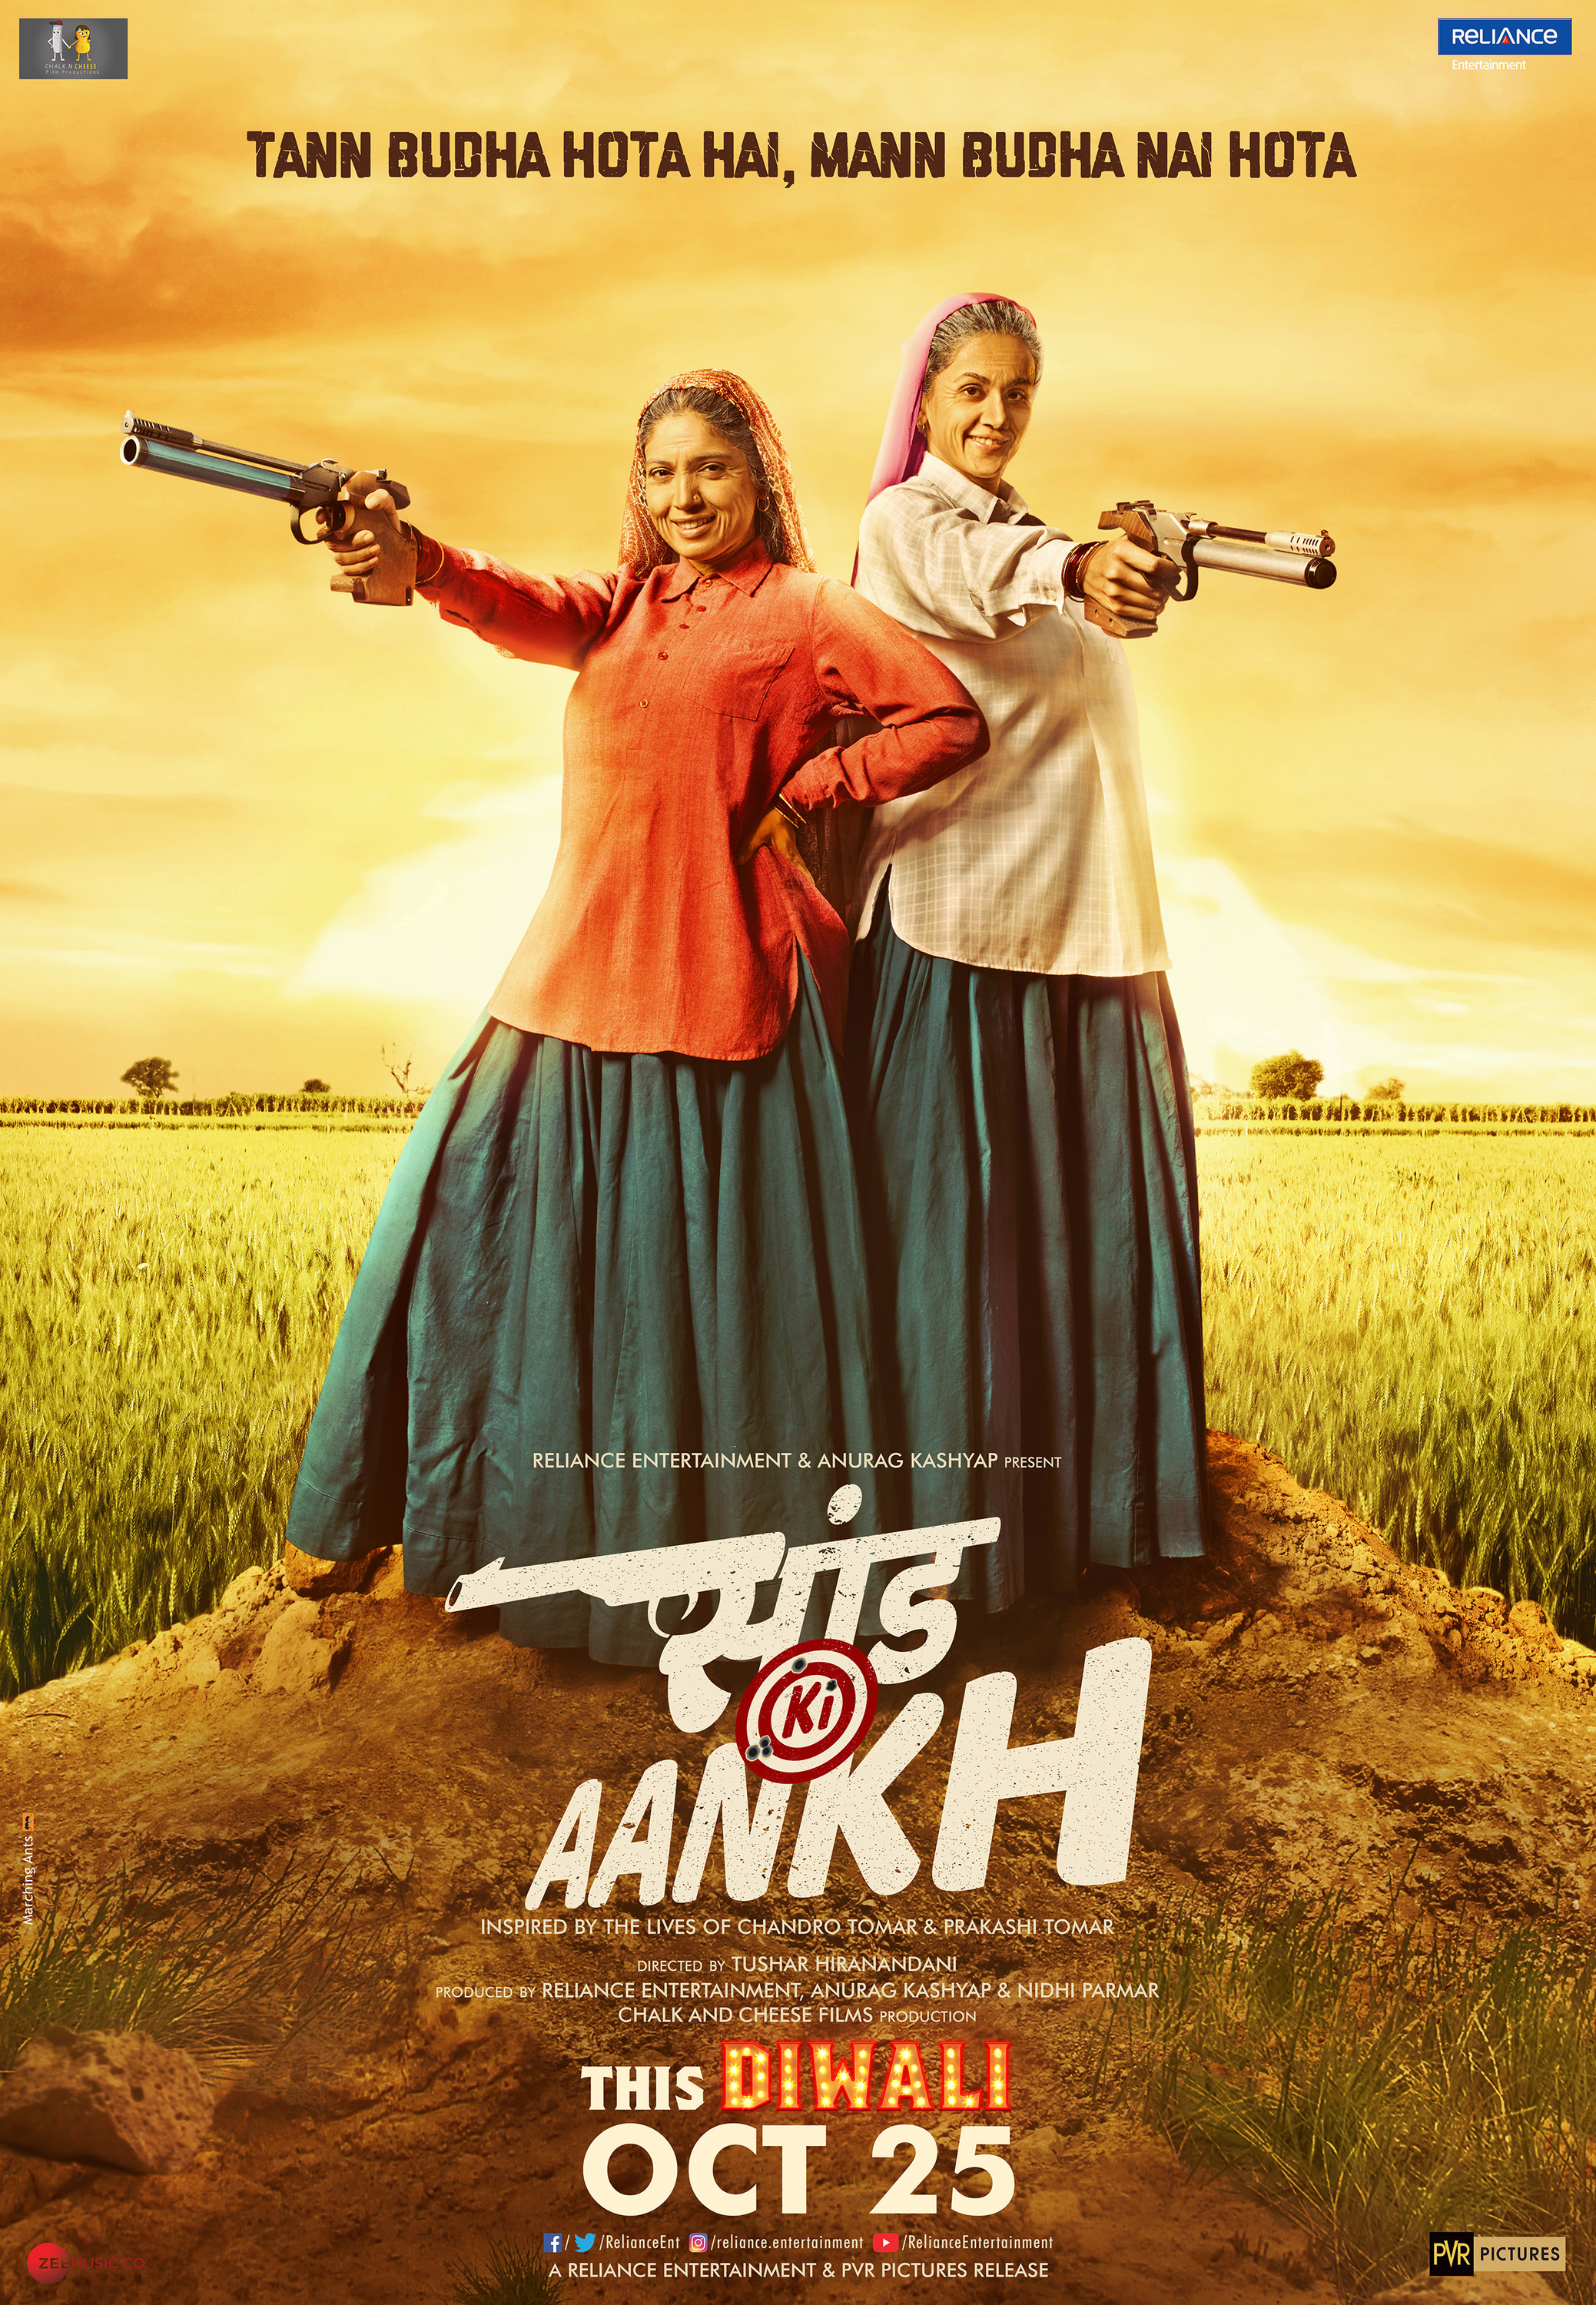 Mega Sized Movie Poster Image for Saand Ki Aankh (#2 of 4)